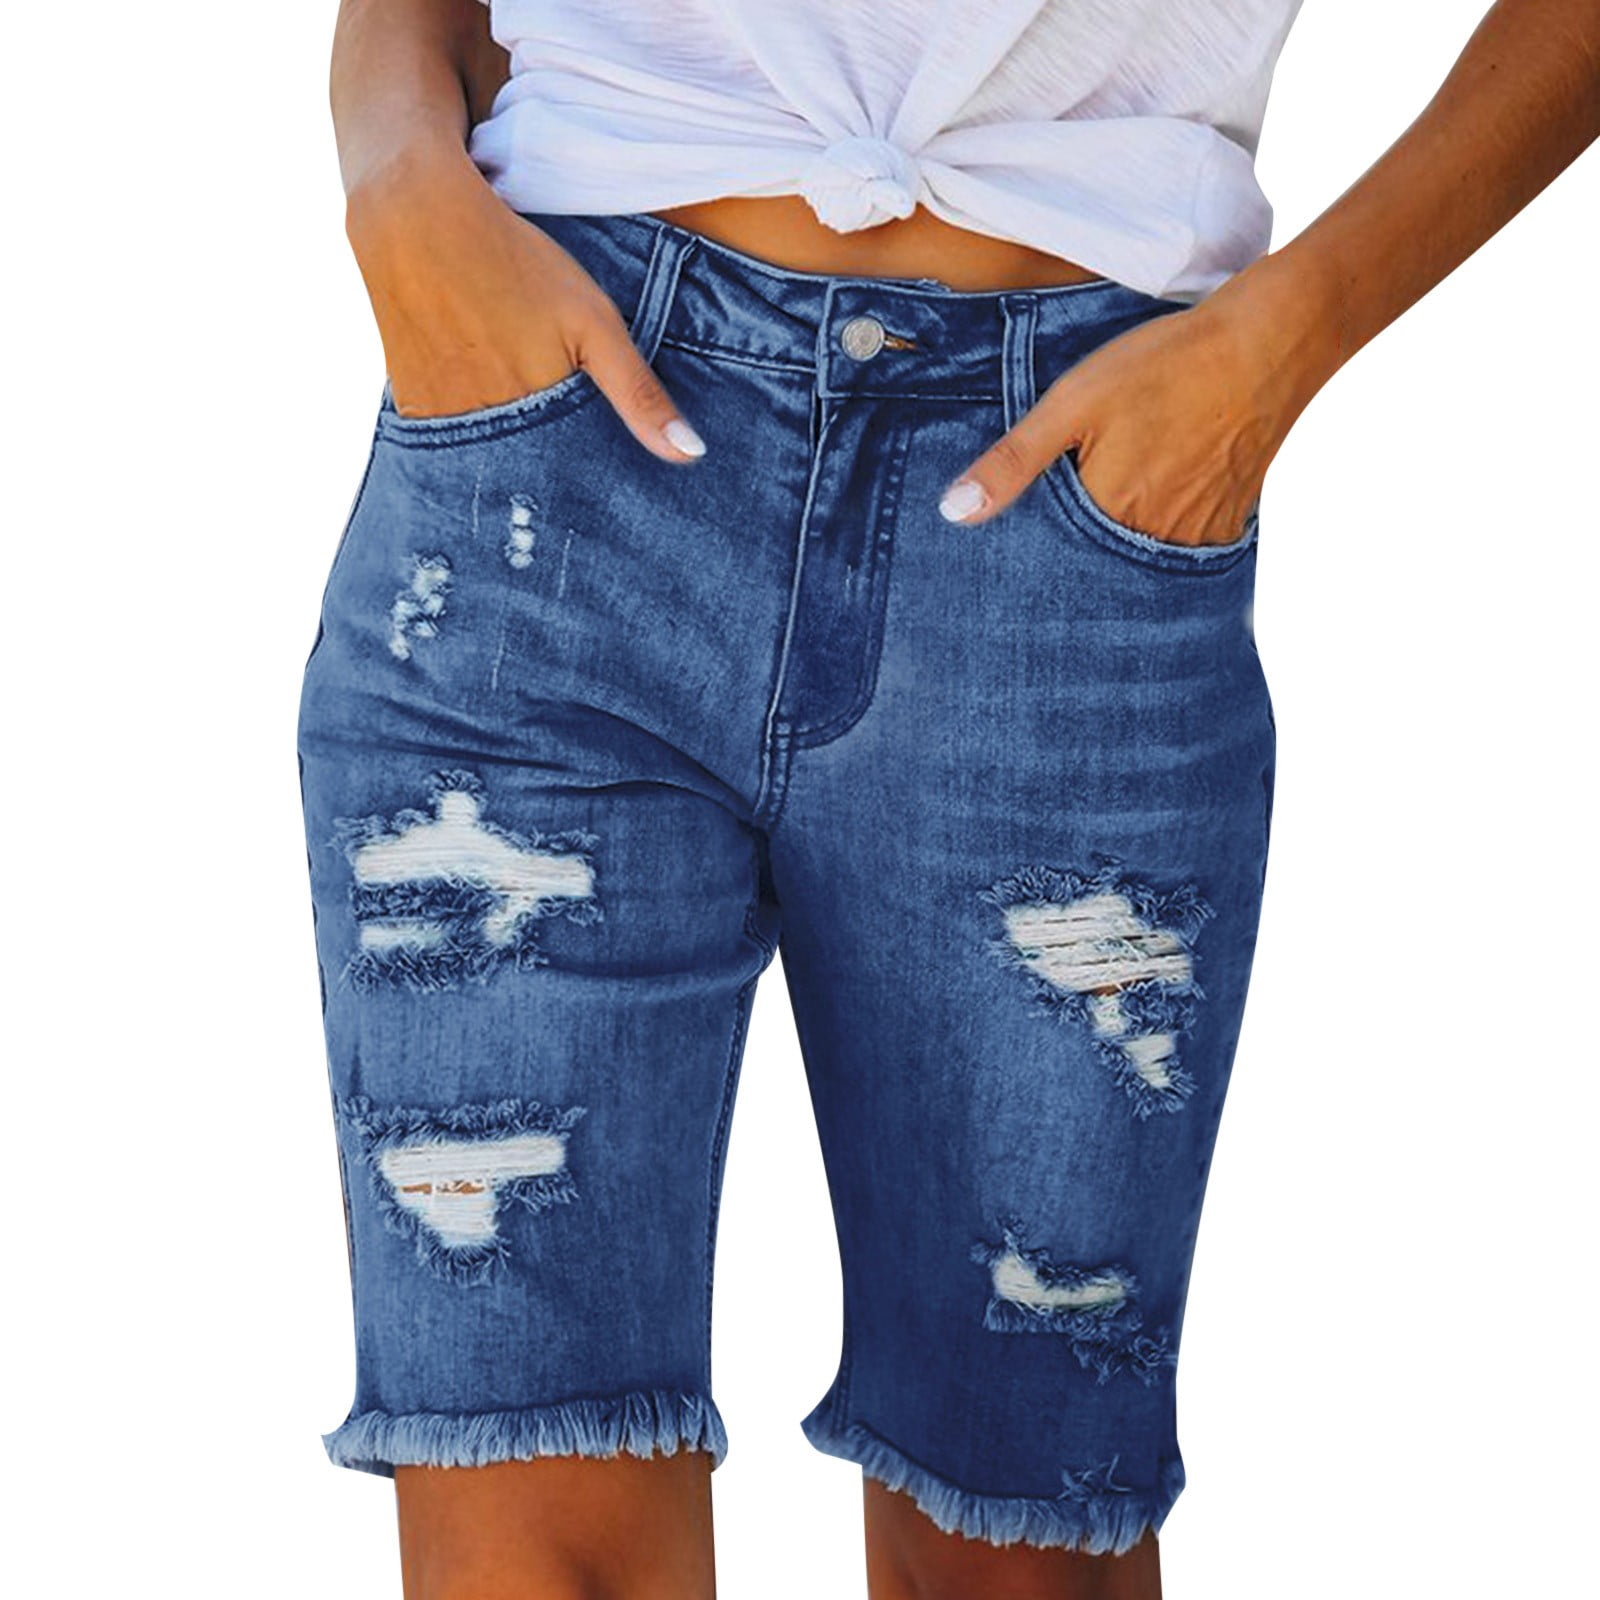 Jsezml Women's Sexy Low Waist Hot Pants Lace Up Stretch Casual Fringed  Denim Mini Jean Shorts Beach Clubwear Booty Shorts 